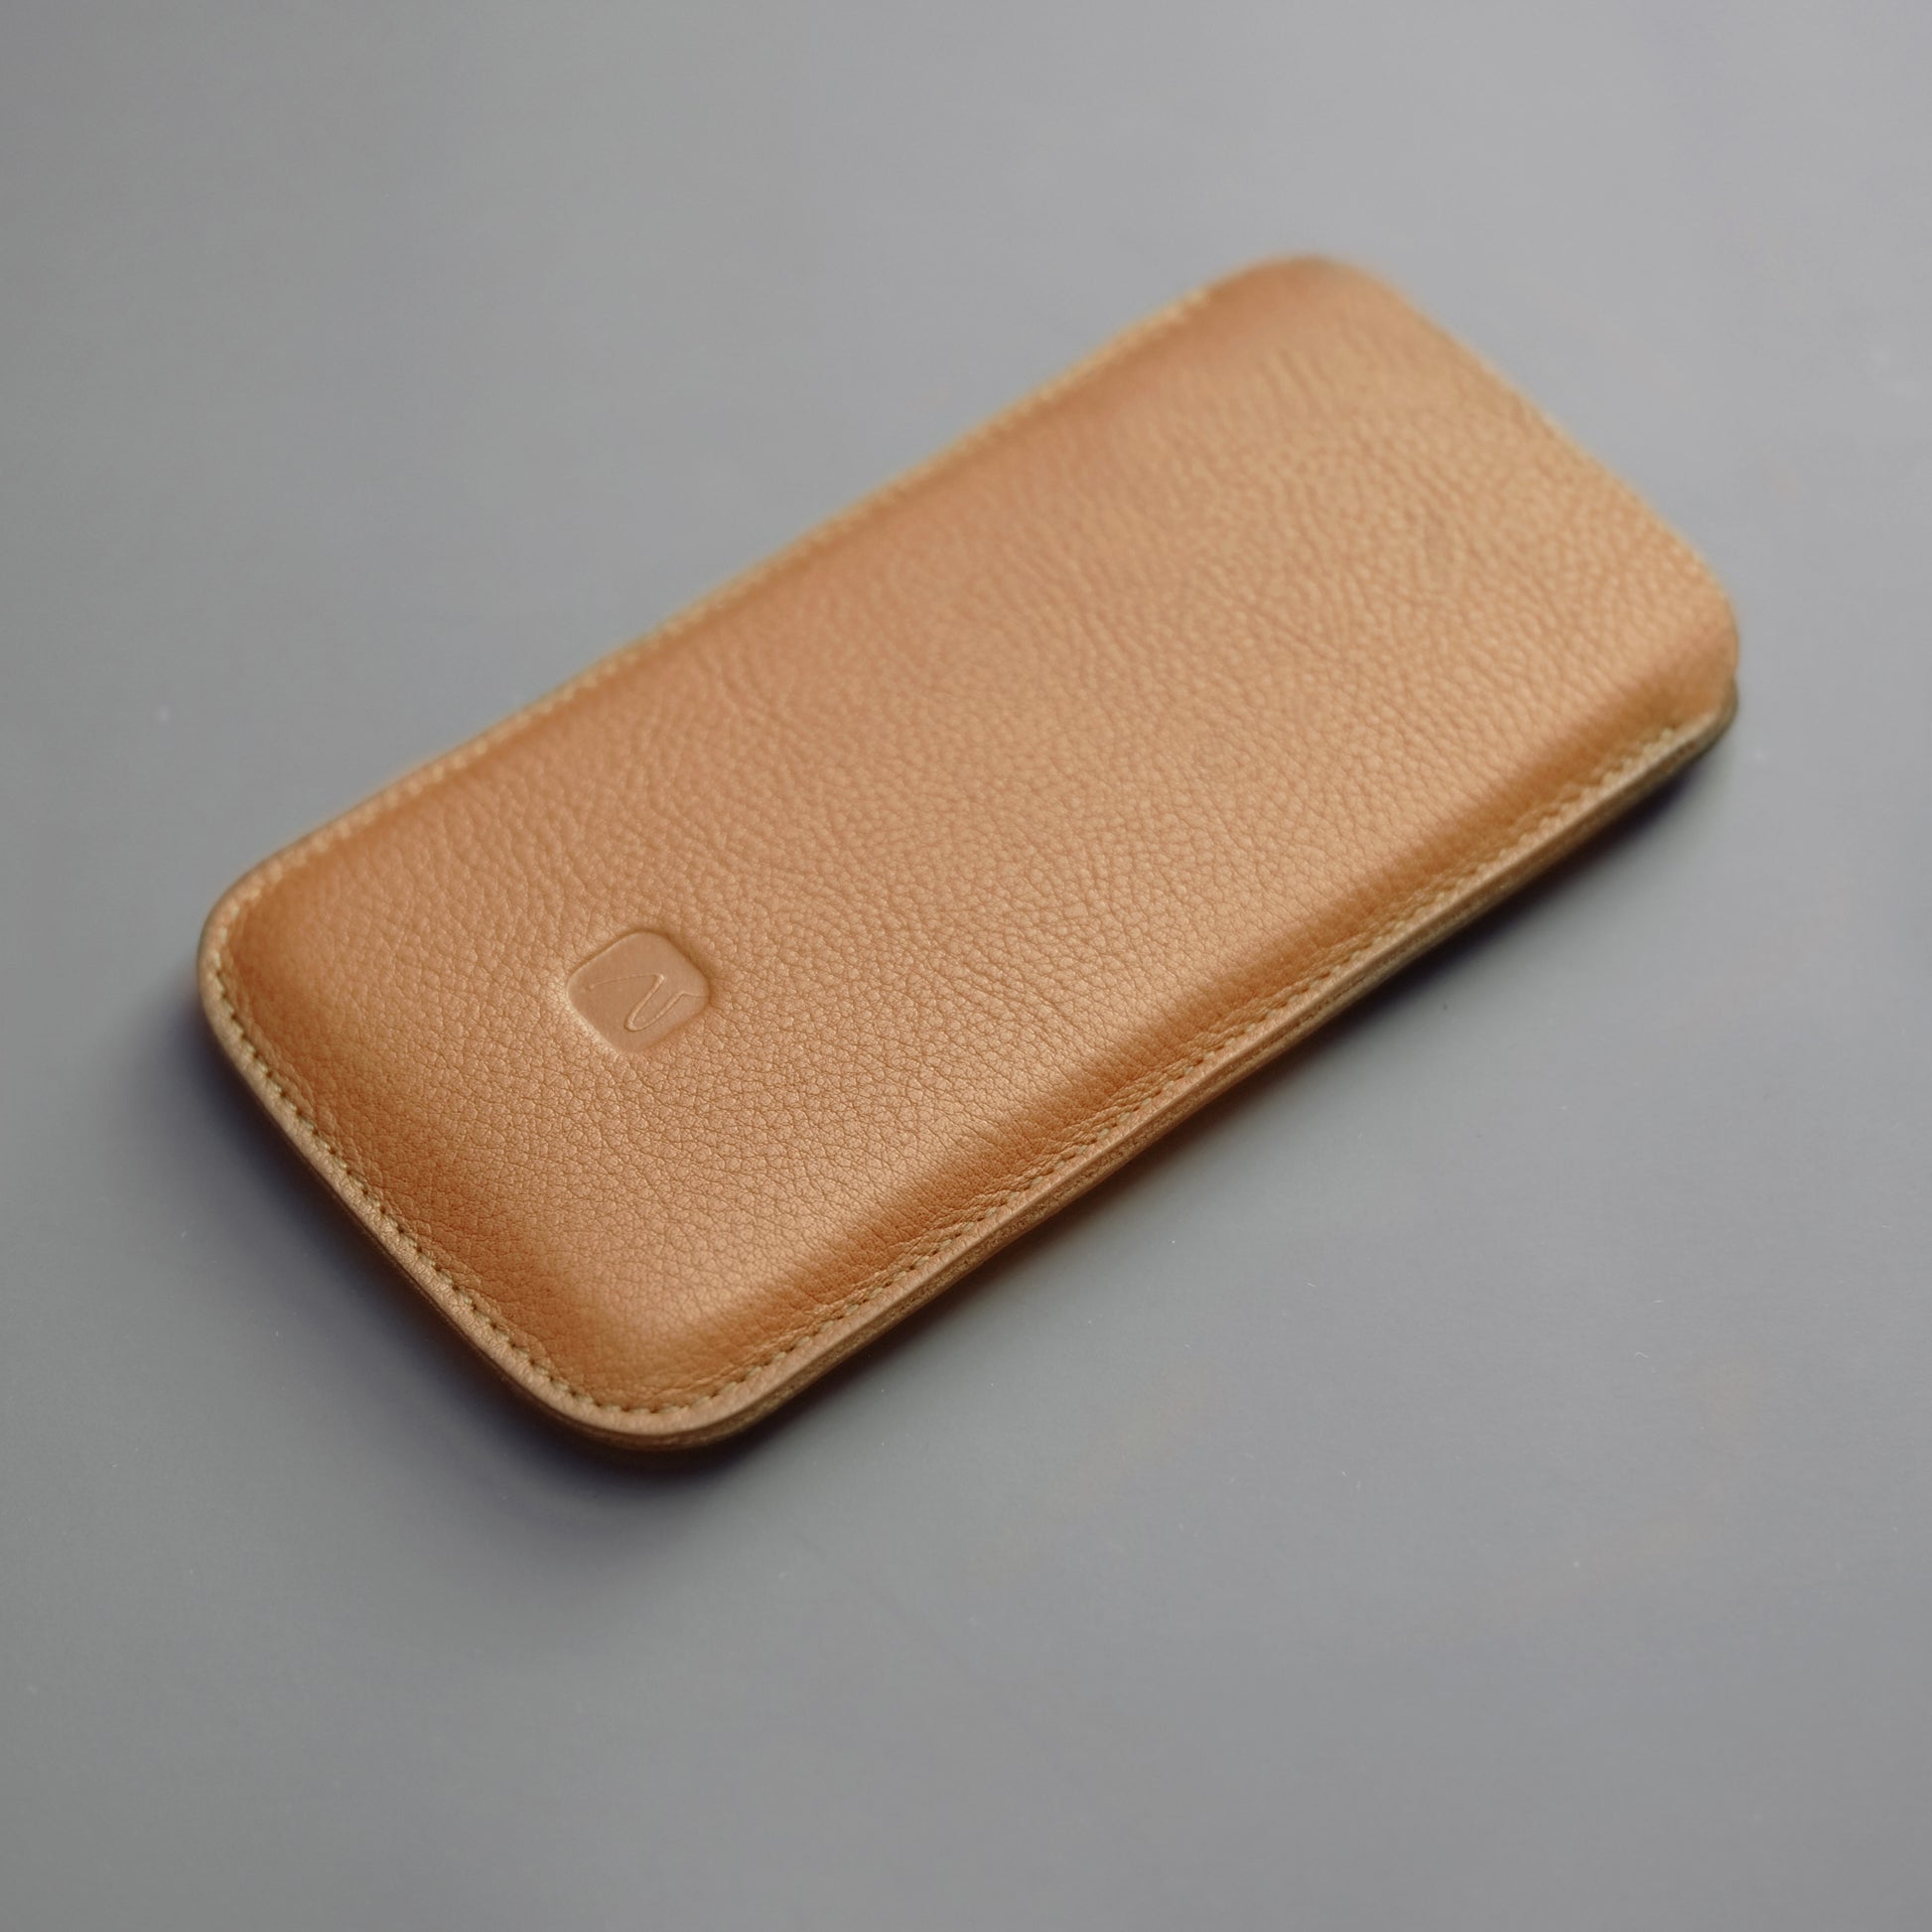 karamellfarbenes iPhone Sleeve aus Leder